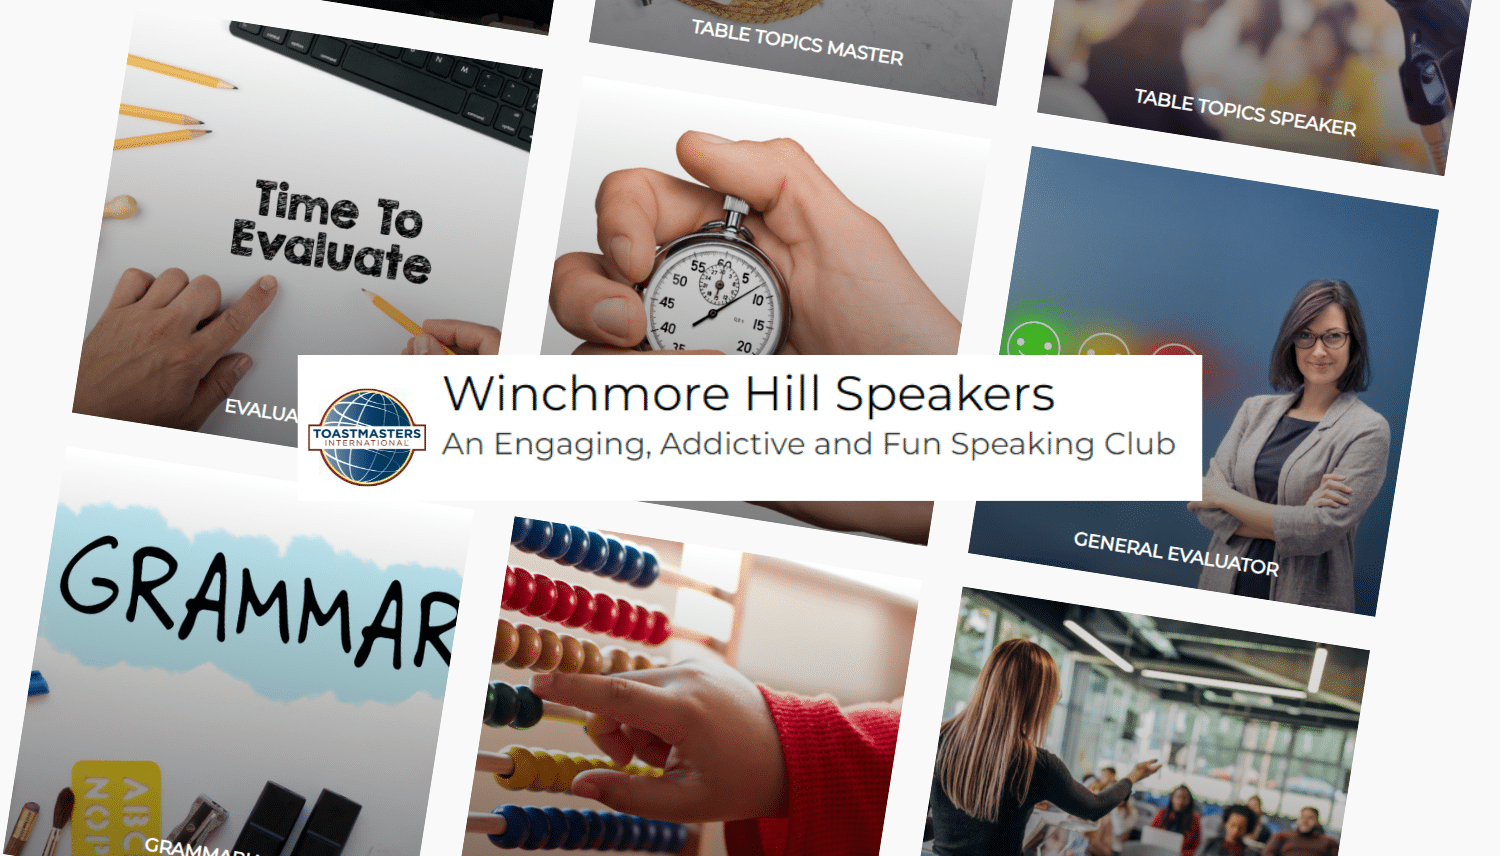 Winchmore Hill Speakers' Website